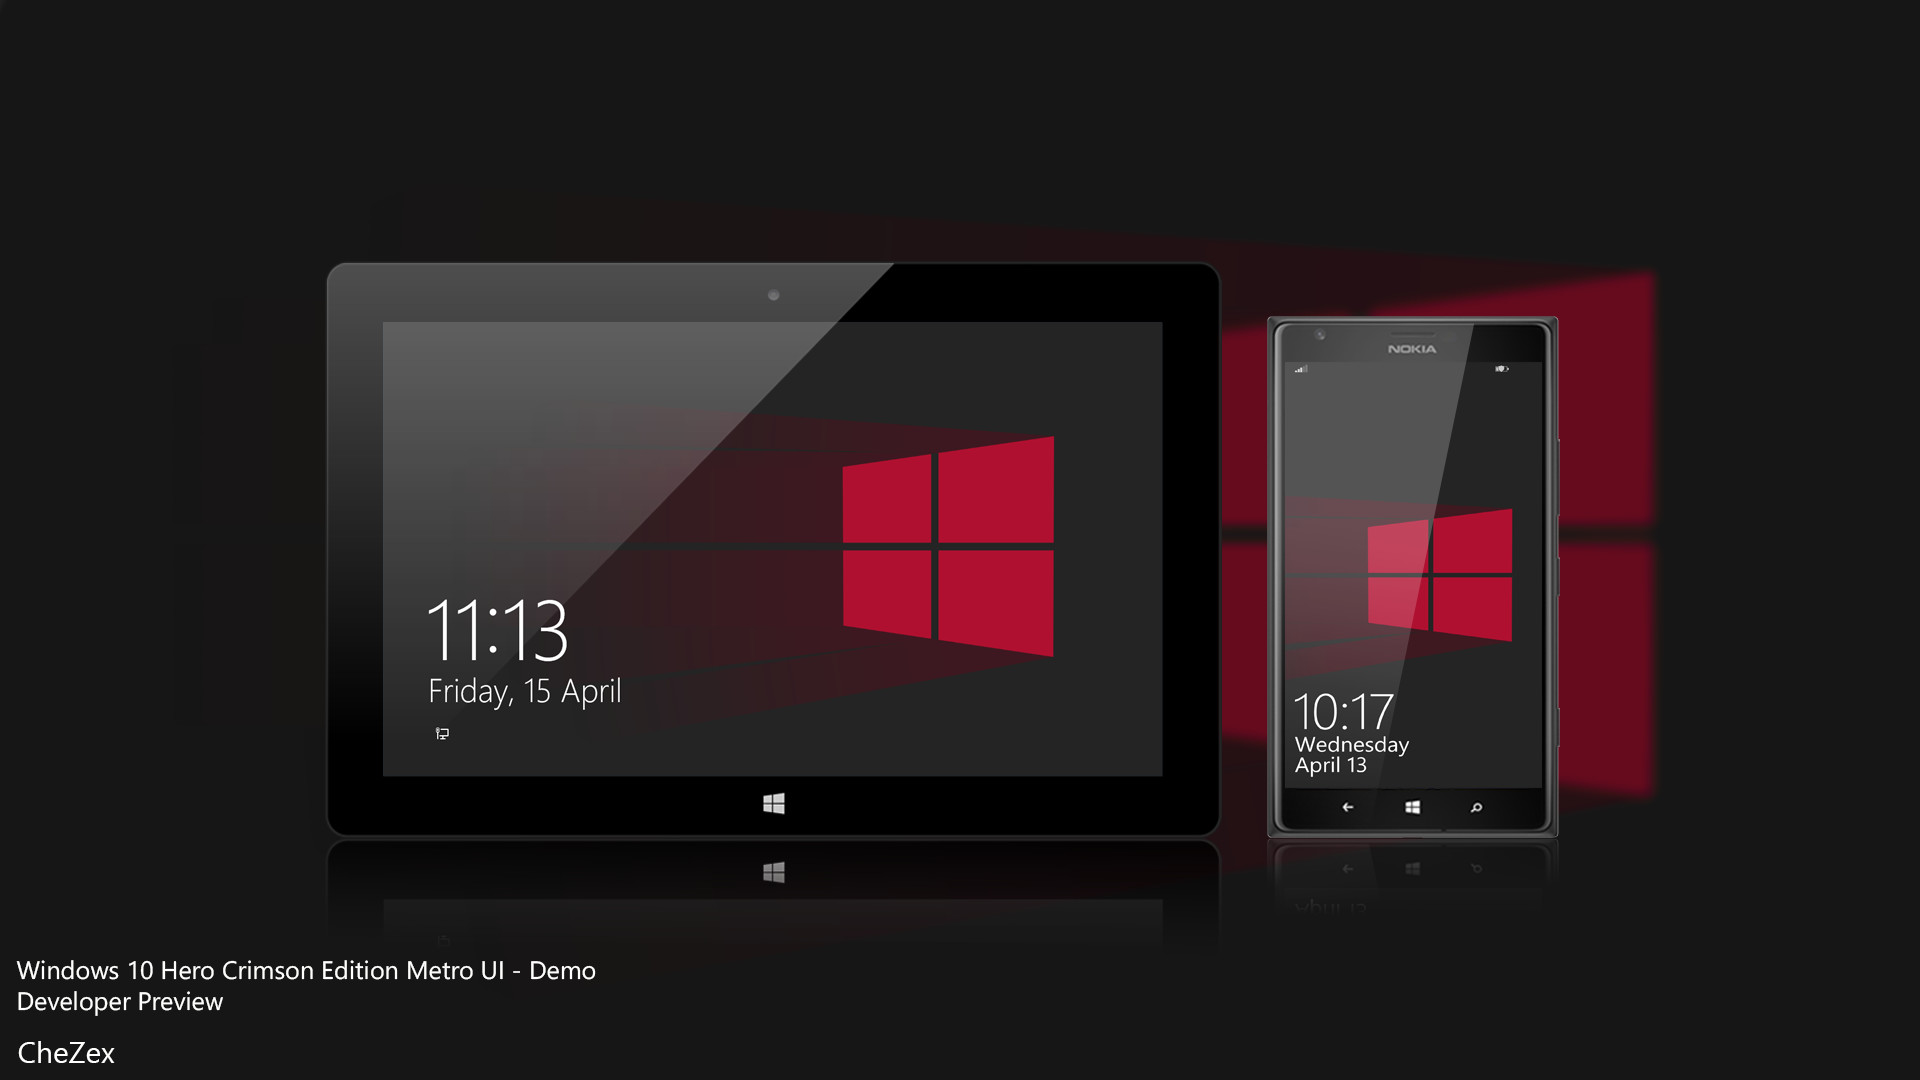 1920x1080 ... Windows 10 Hero Crimson Edition Metro UI - Demo by CheZex